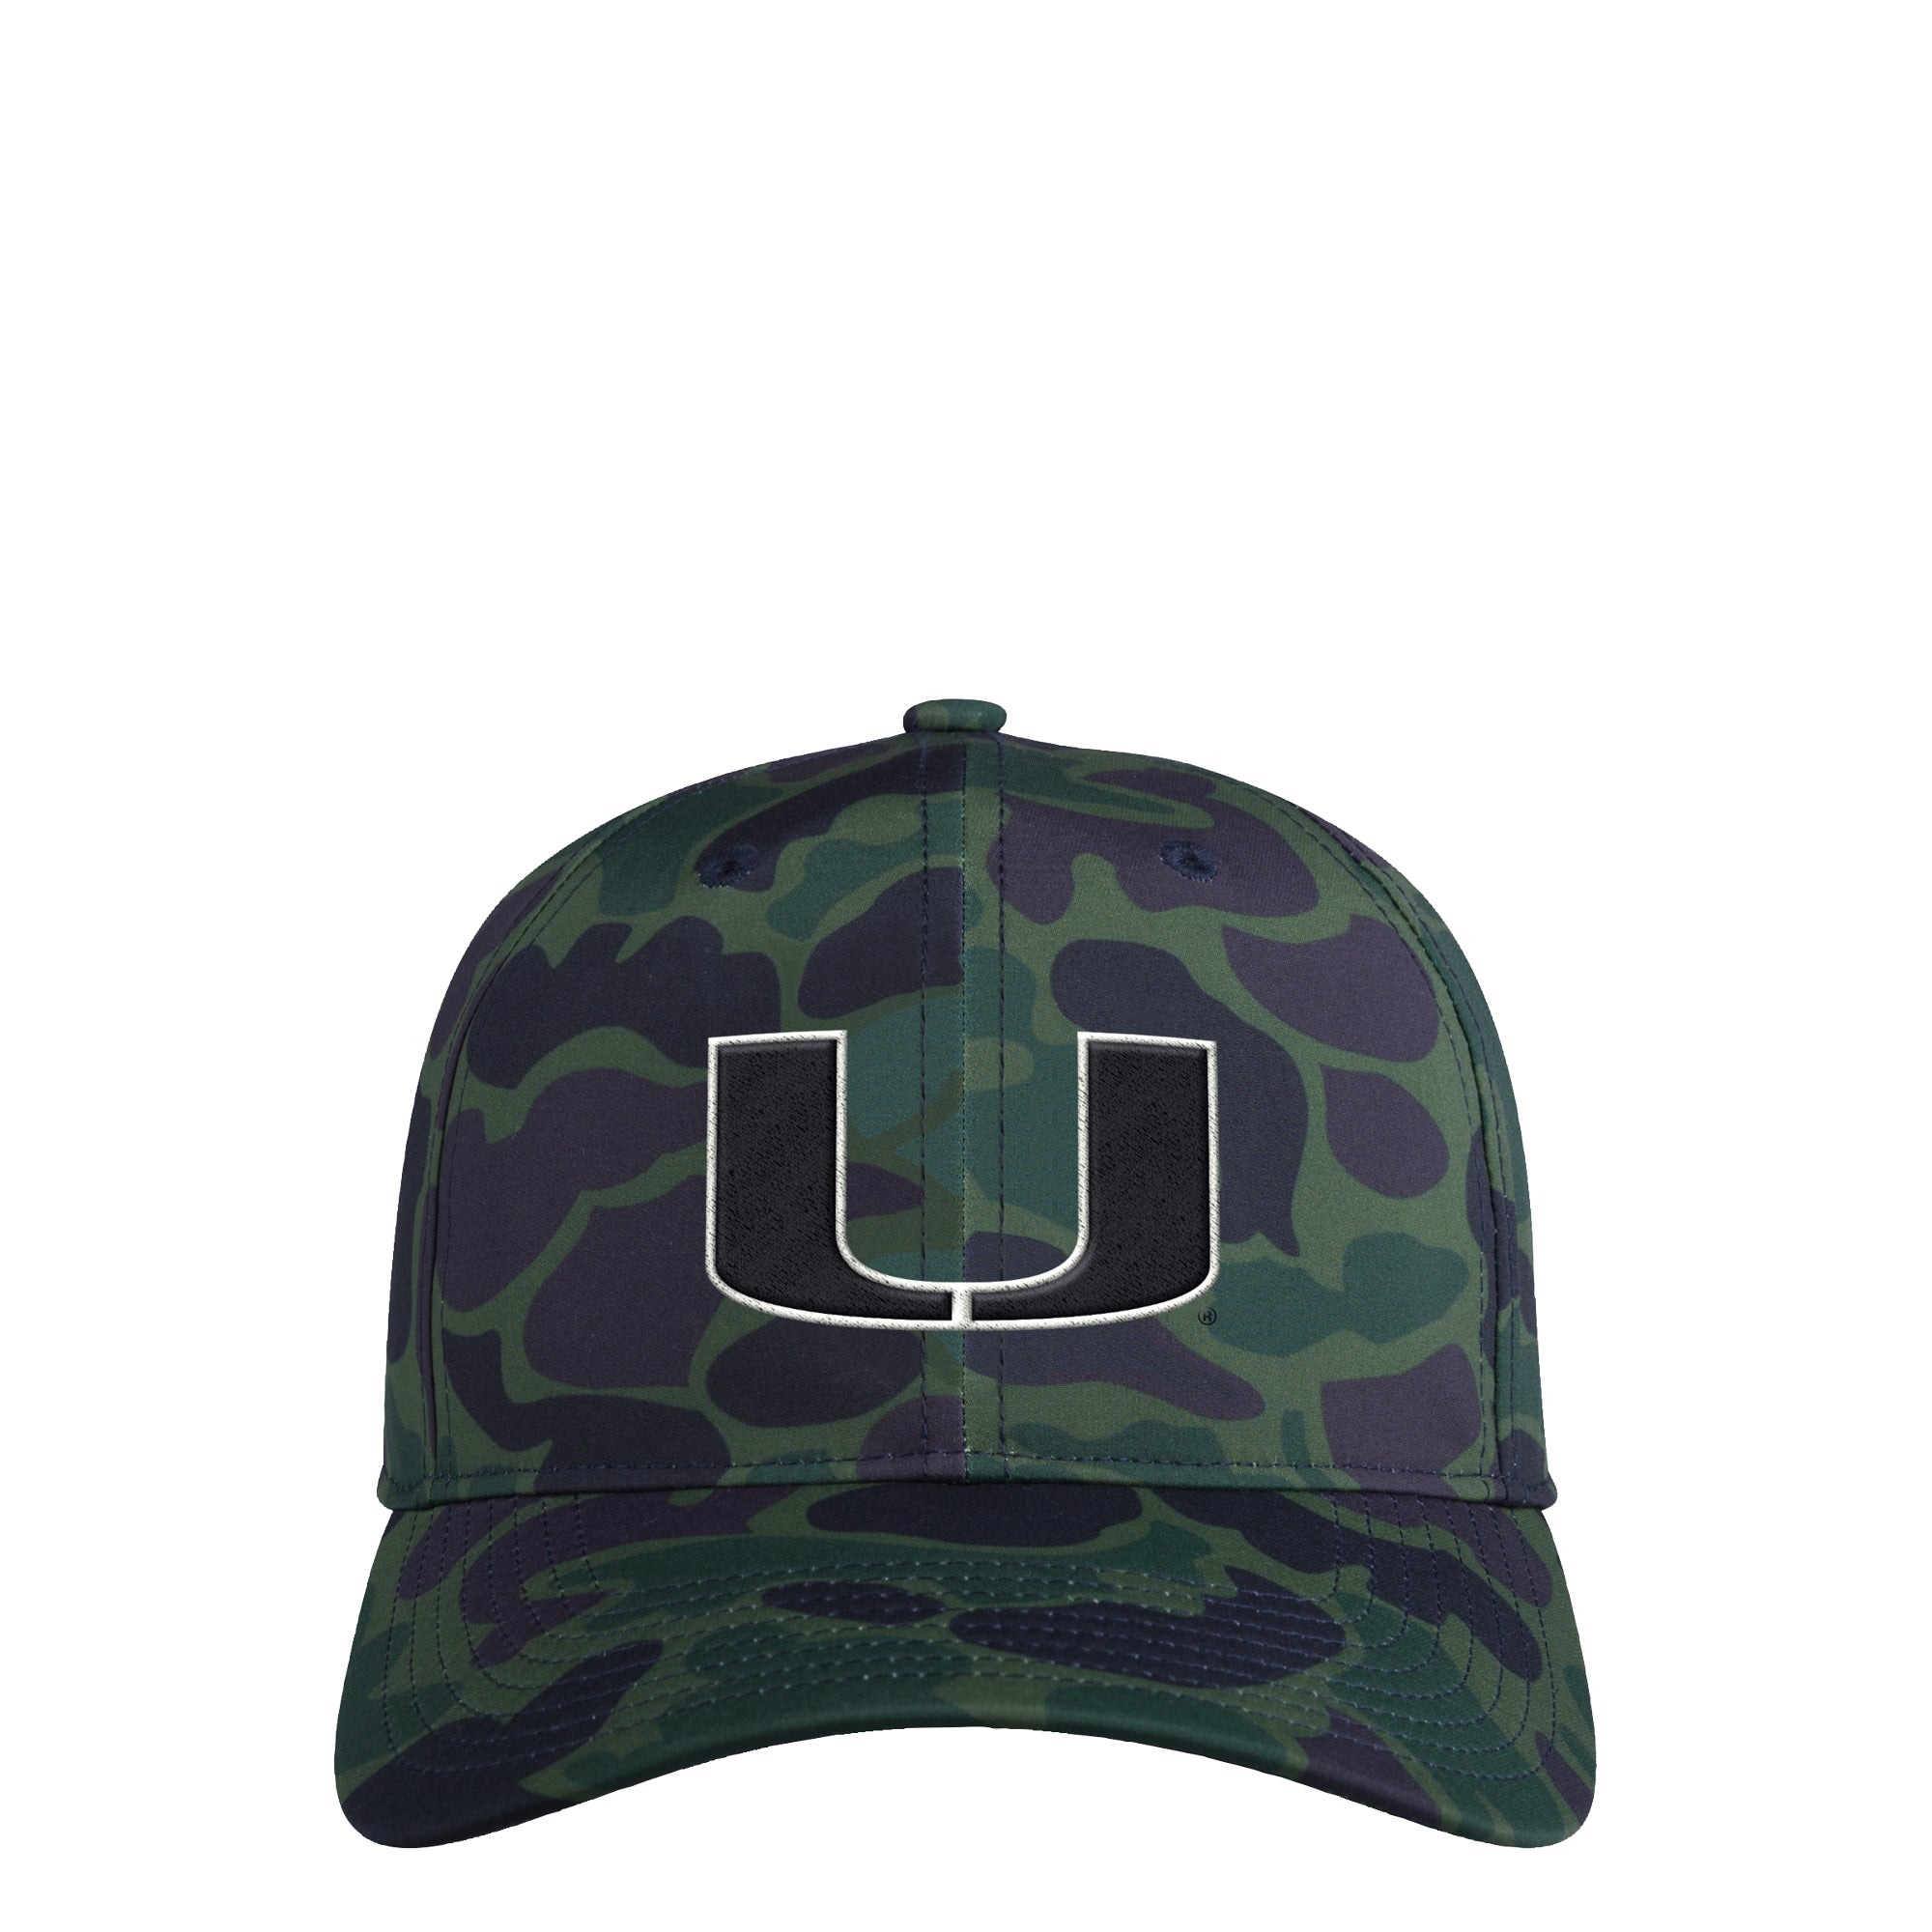 Miami Hurricanes adidas Camo Slouch Adjustable Hat